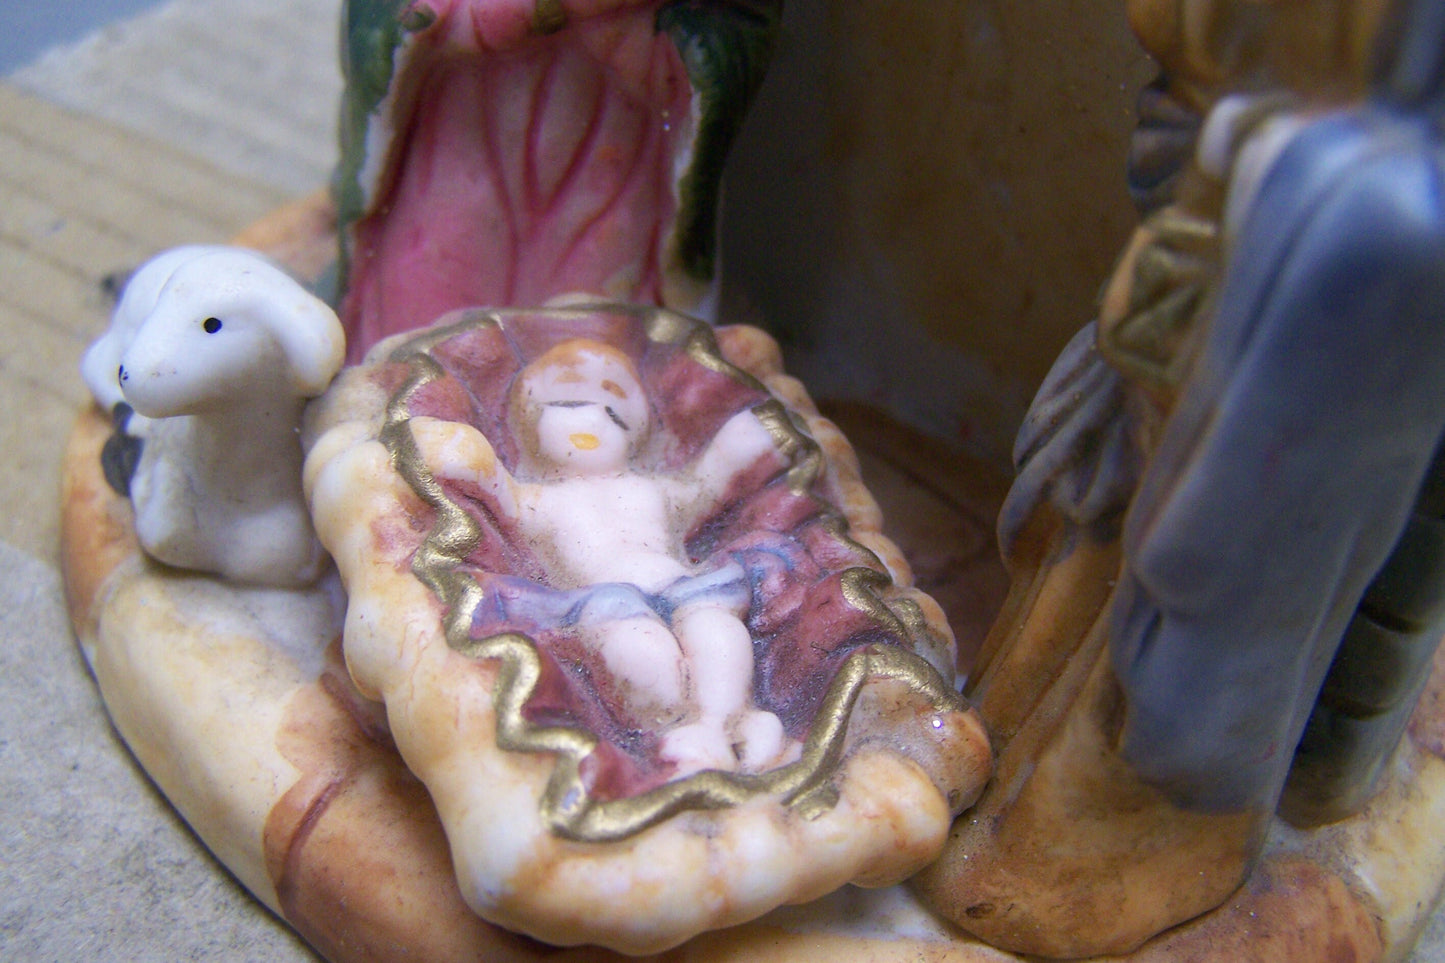 Tabletop Basic Ceramic Nativity Set with "Gloria" Angel - Mexico